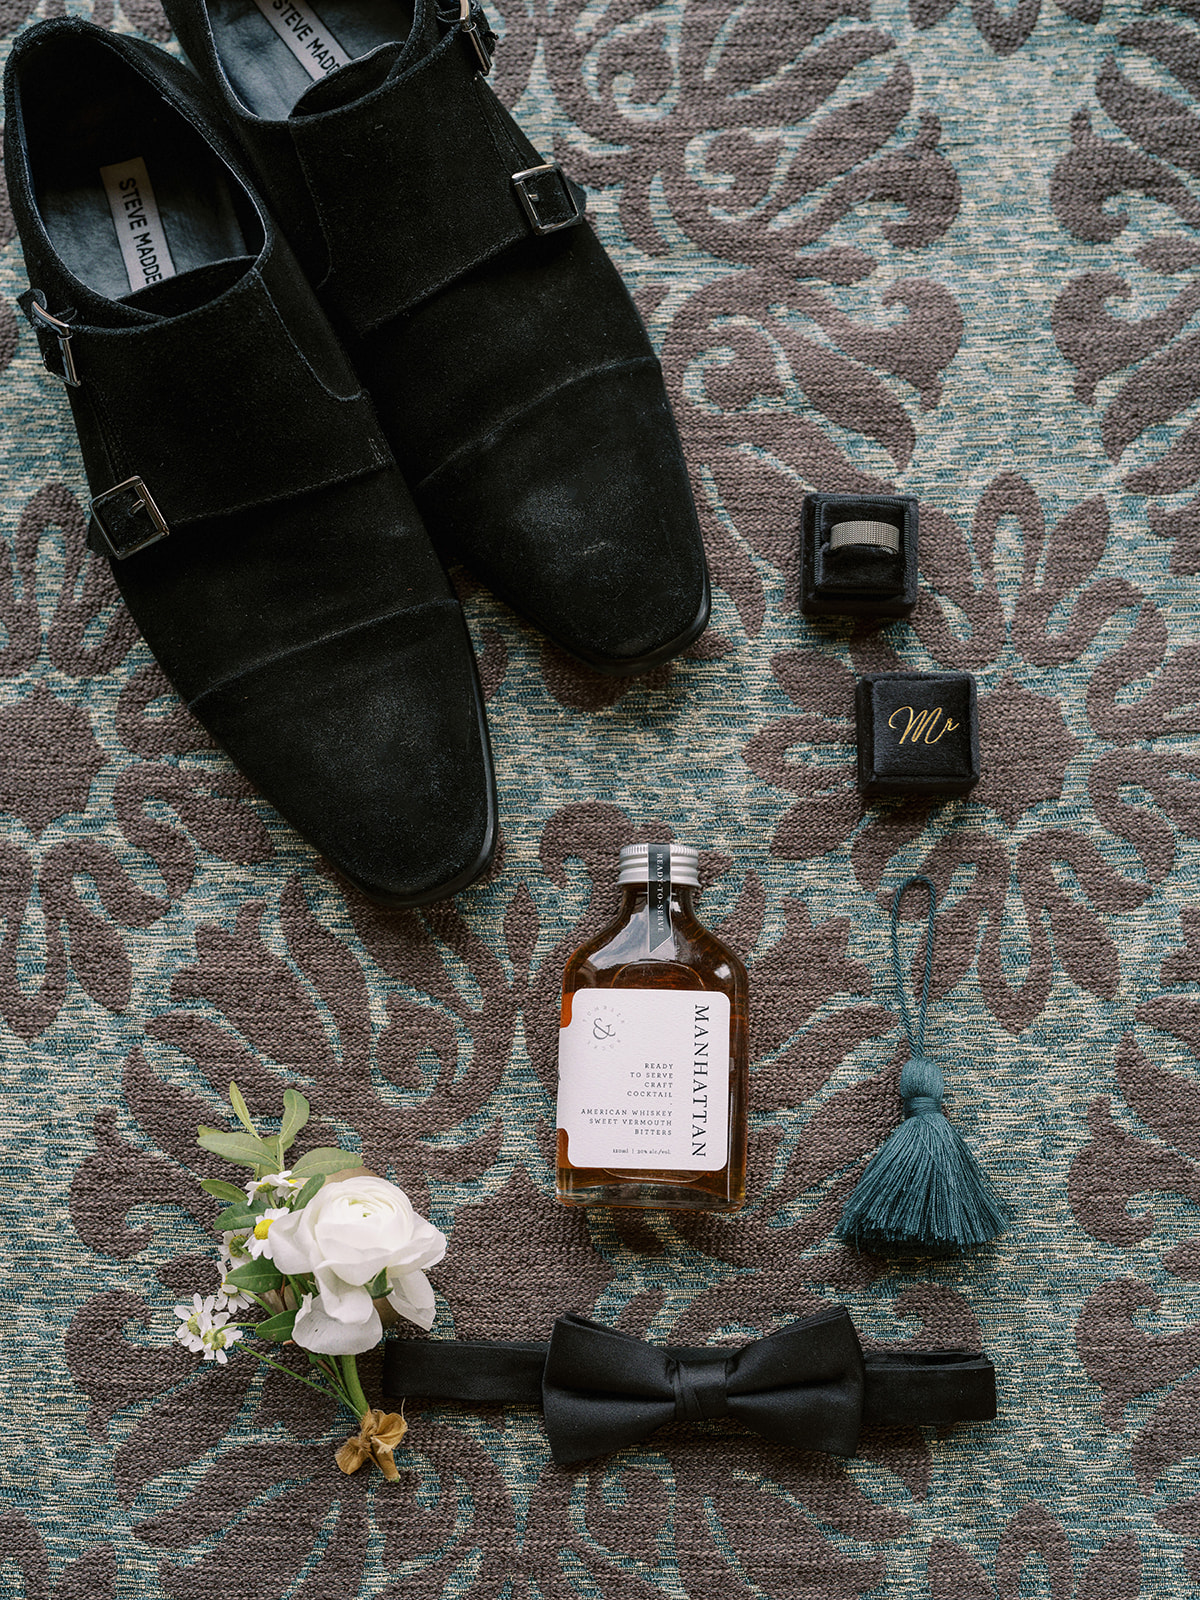 Elegant groom details featuring black velvet shoes, “Mr” ring box and custom Manhattan cocktail captured by Justine Milton.
